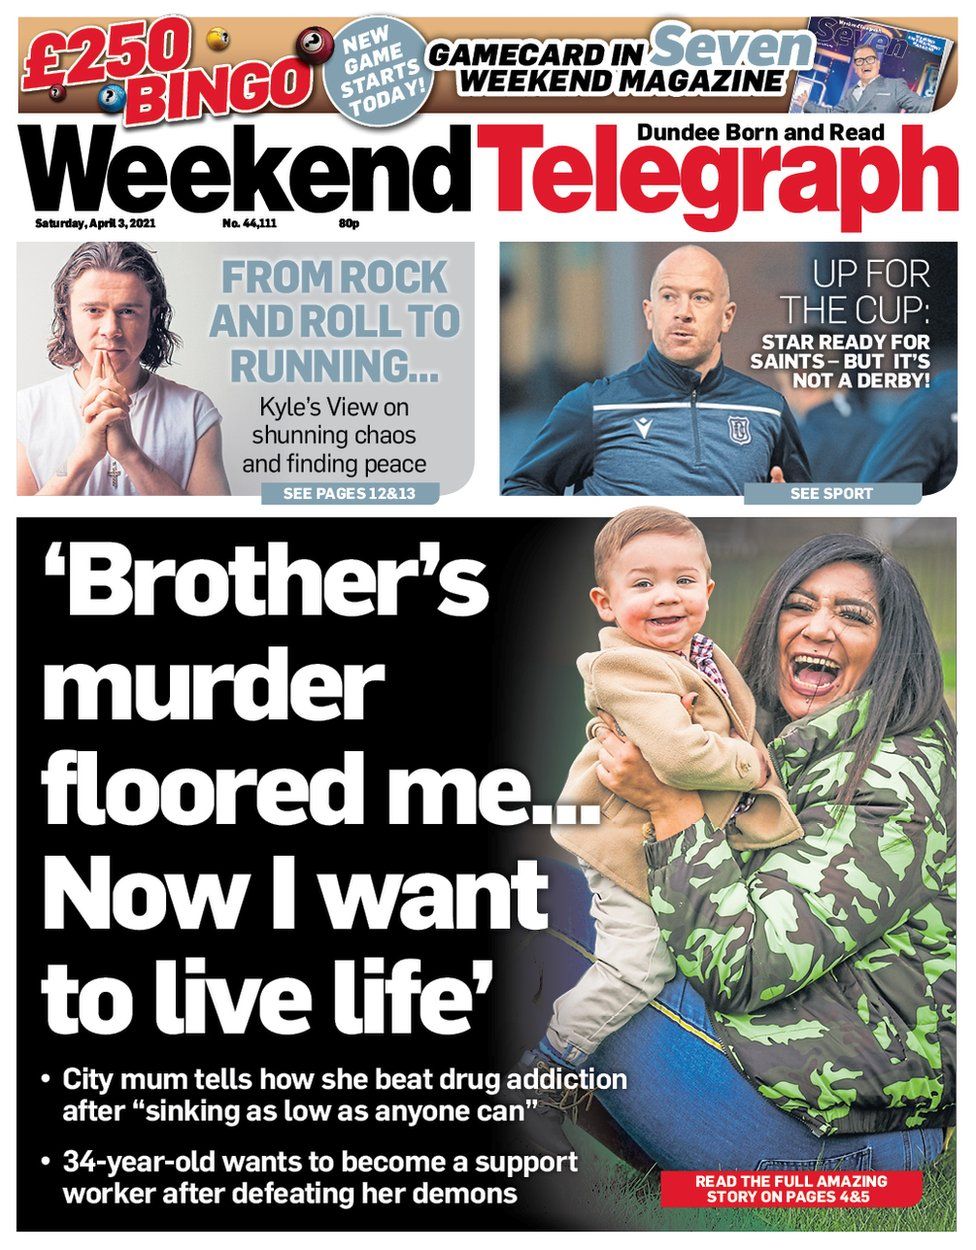 Weekend Telegraph